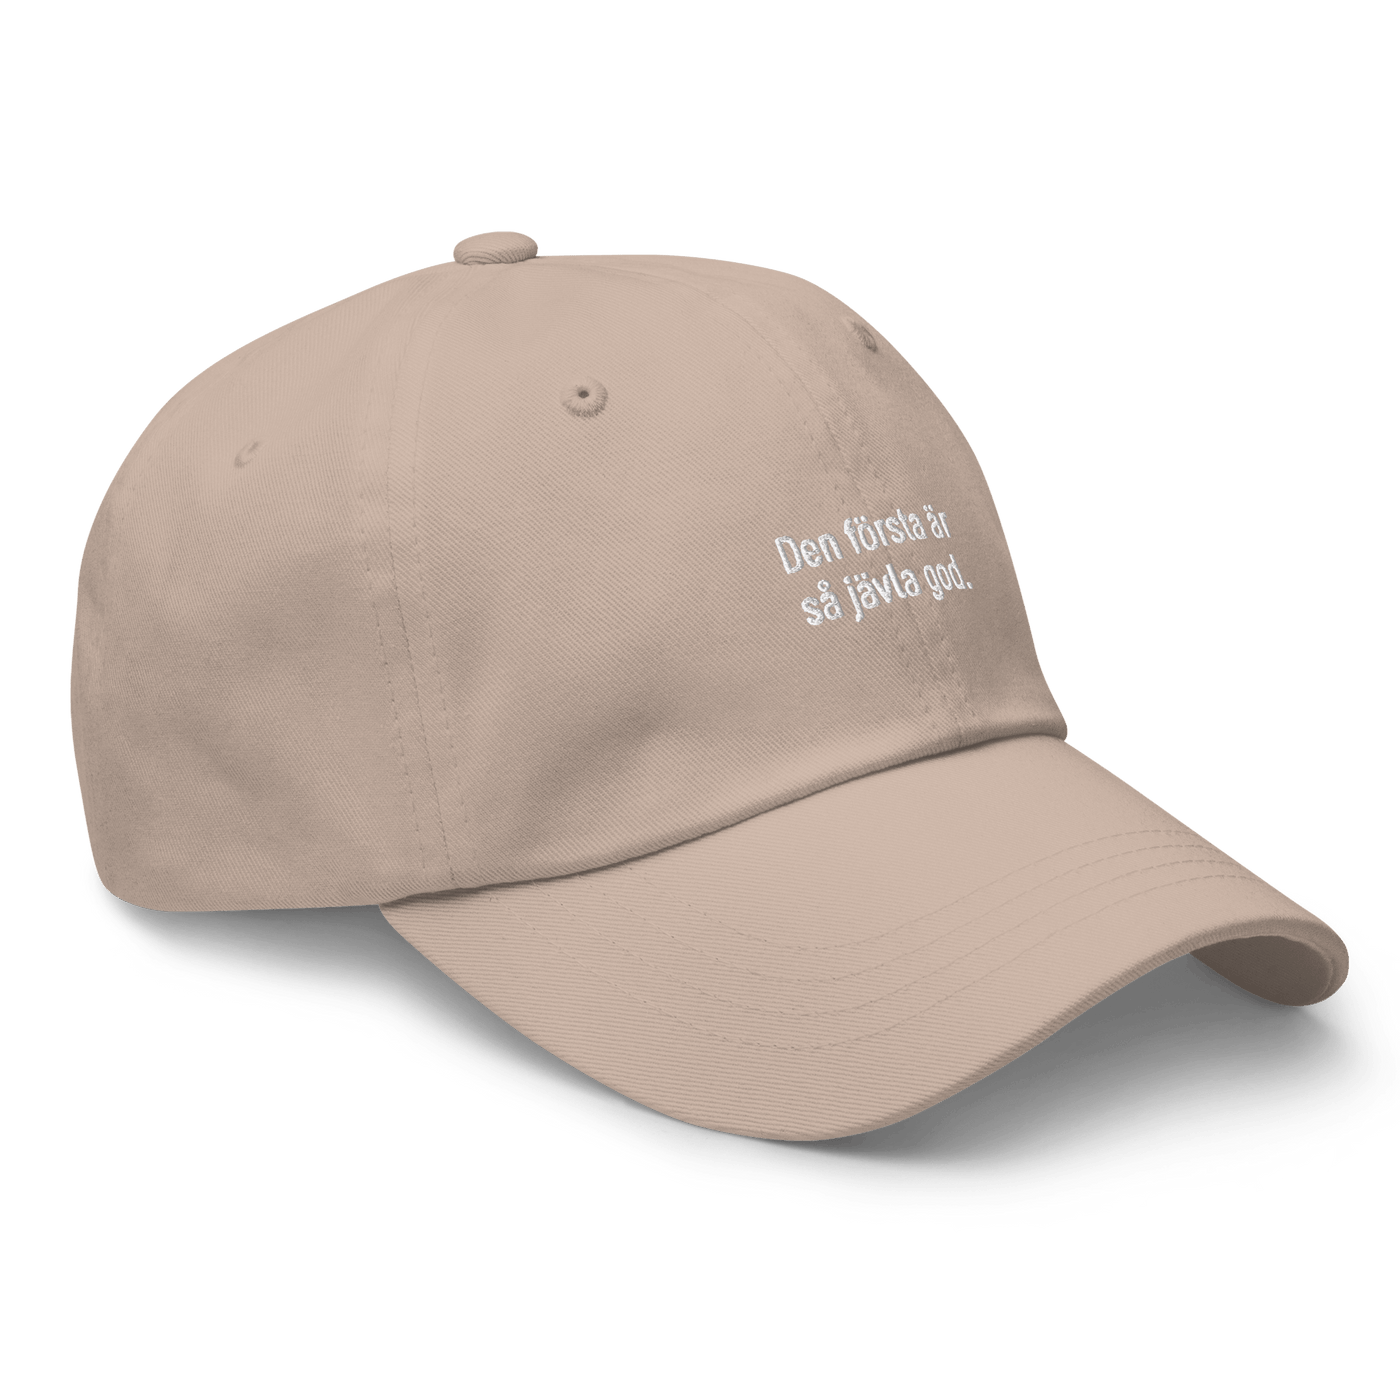 Den första Dad hat - Stone - - Just Another Cap Store